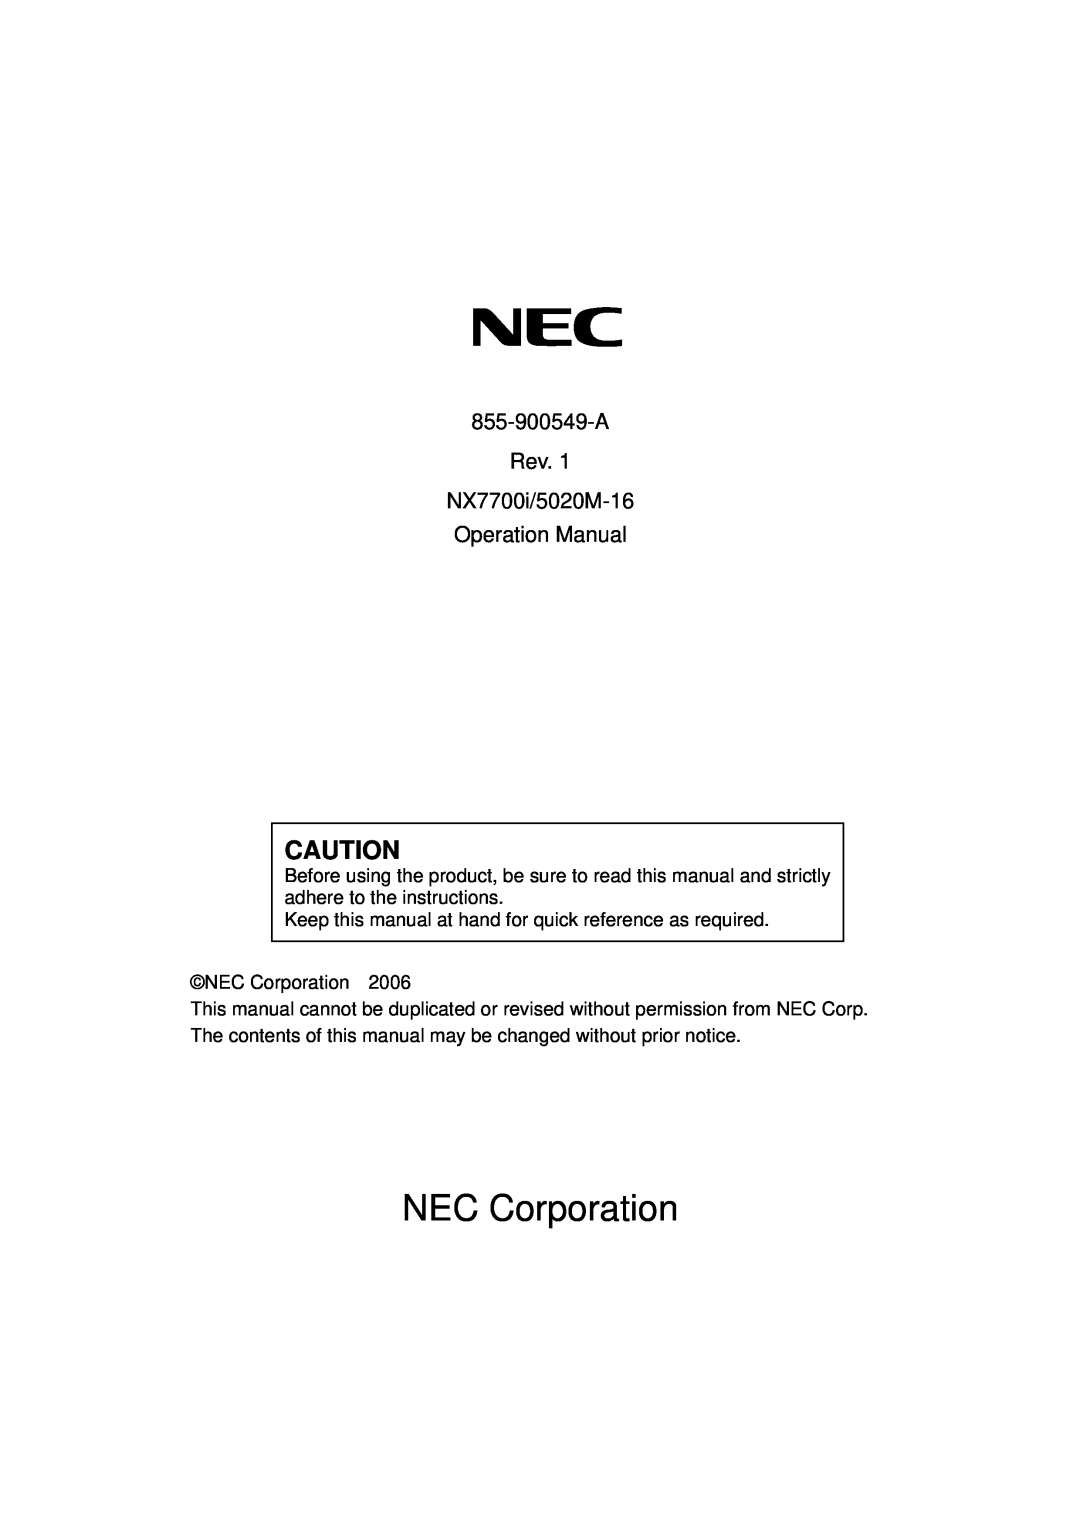 NEC operation manual A Rev NX7700i/5020M-16 Operation Manual, NEC Corporation 